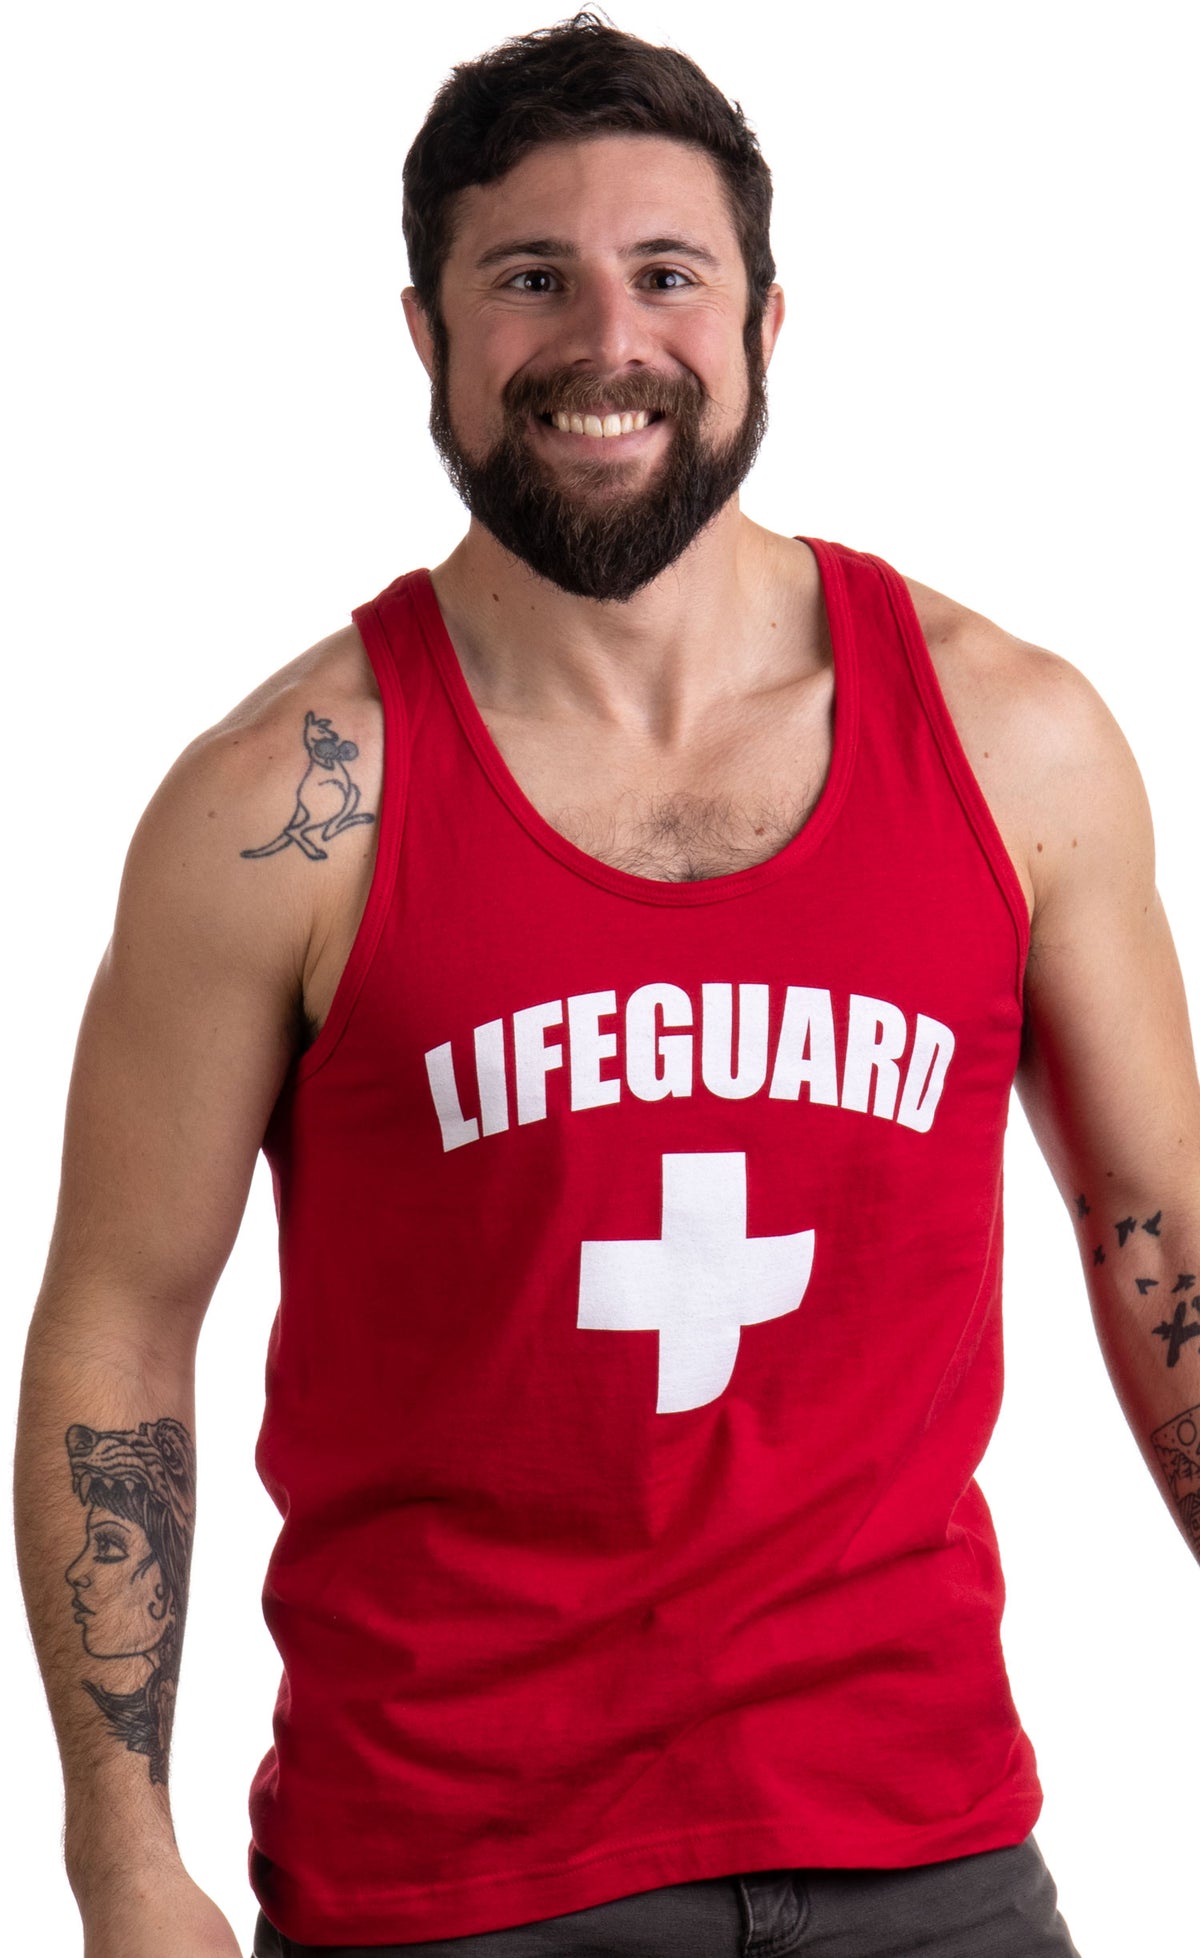 LIFEGUARD | Red Adult Lifeguarding Uniform Costume Unisex Tank Top Men Women